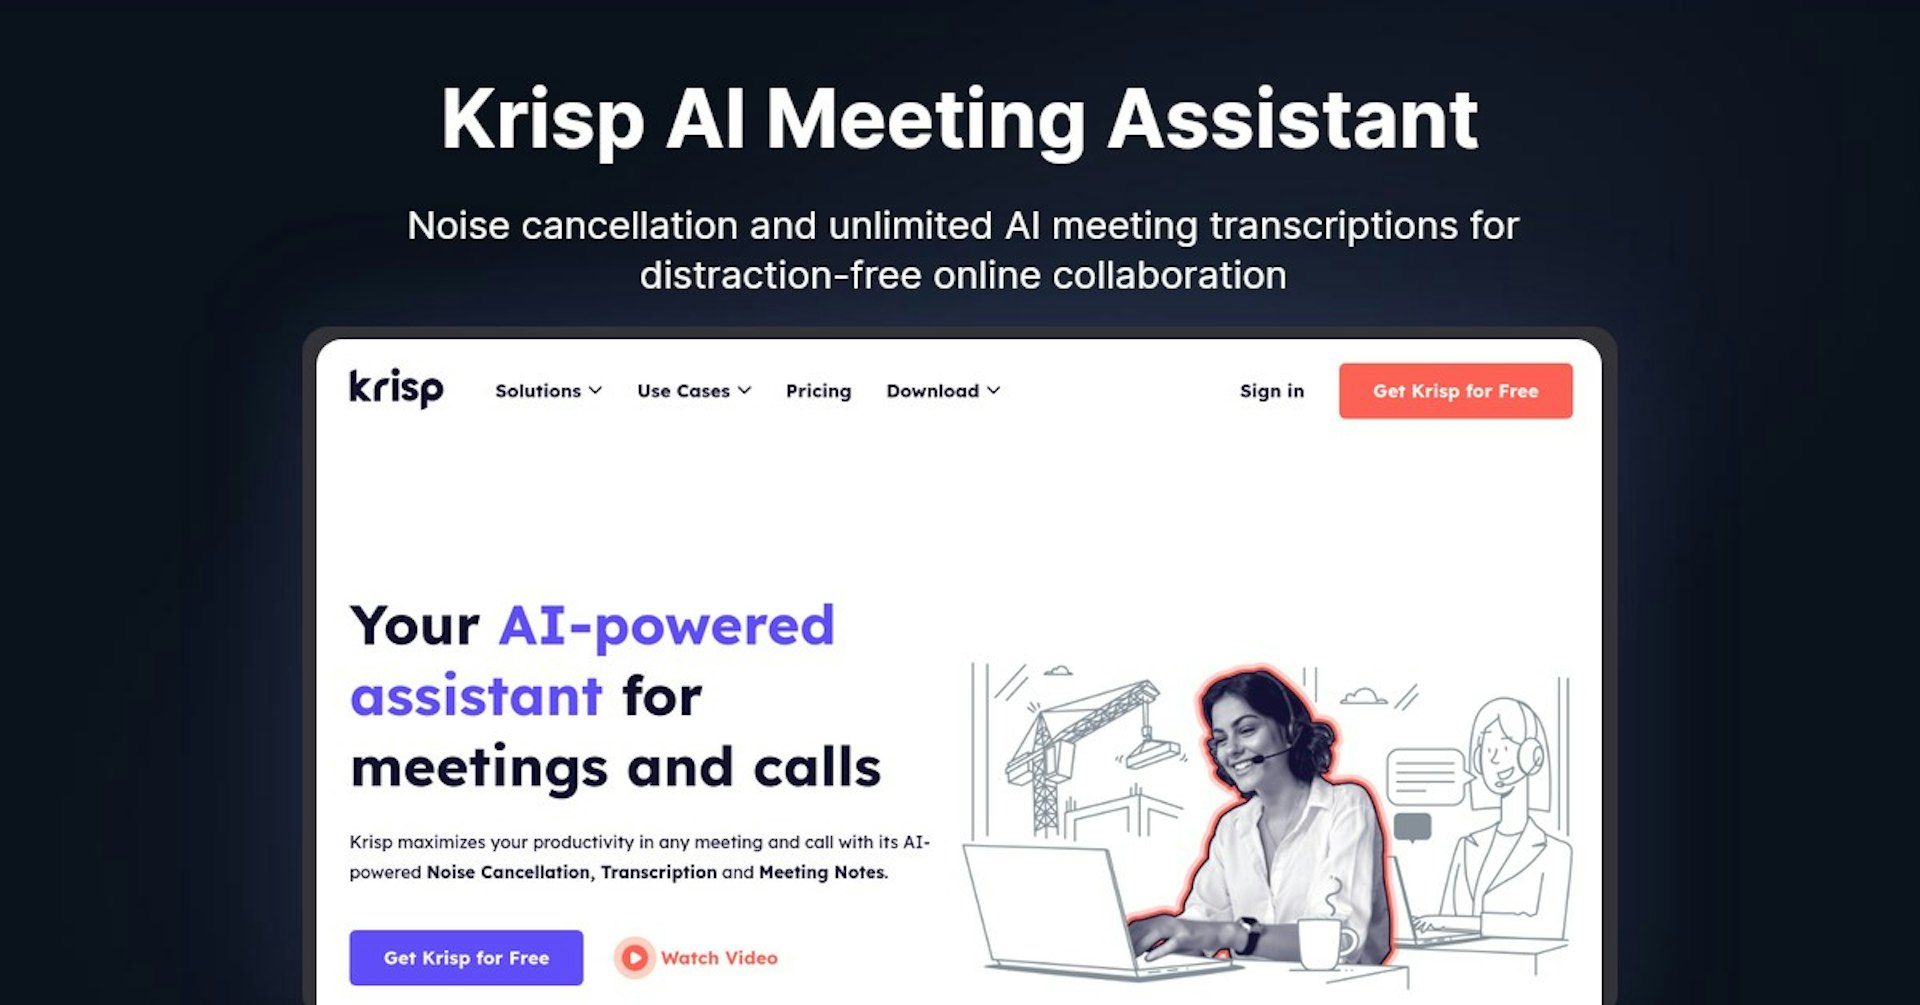 Krisp AI Meeting Assistant